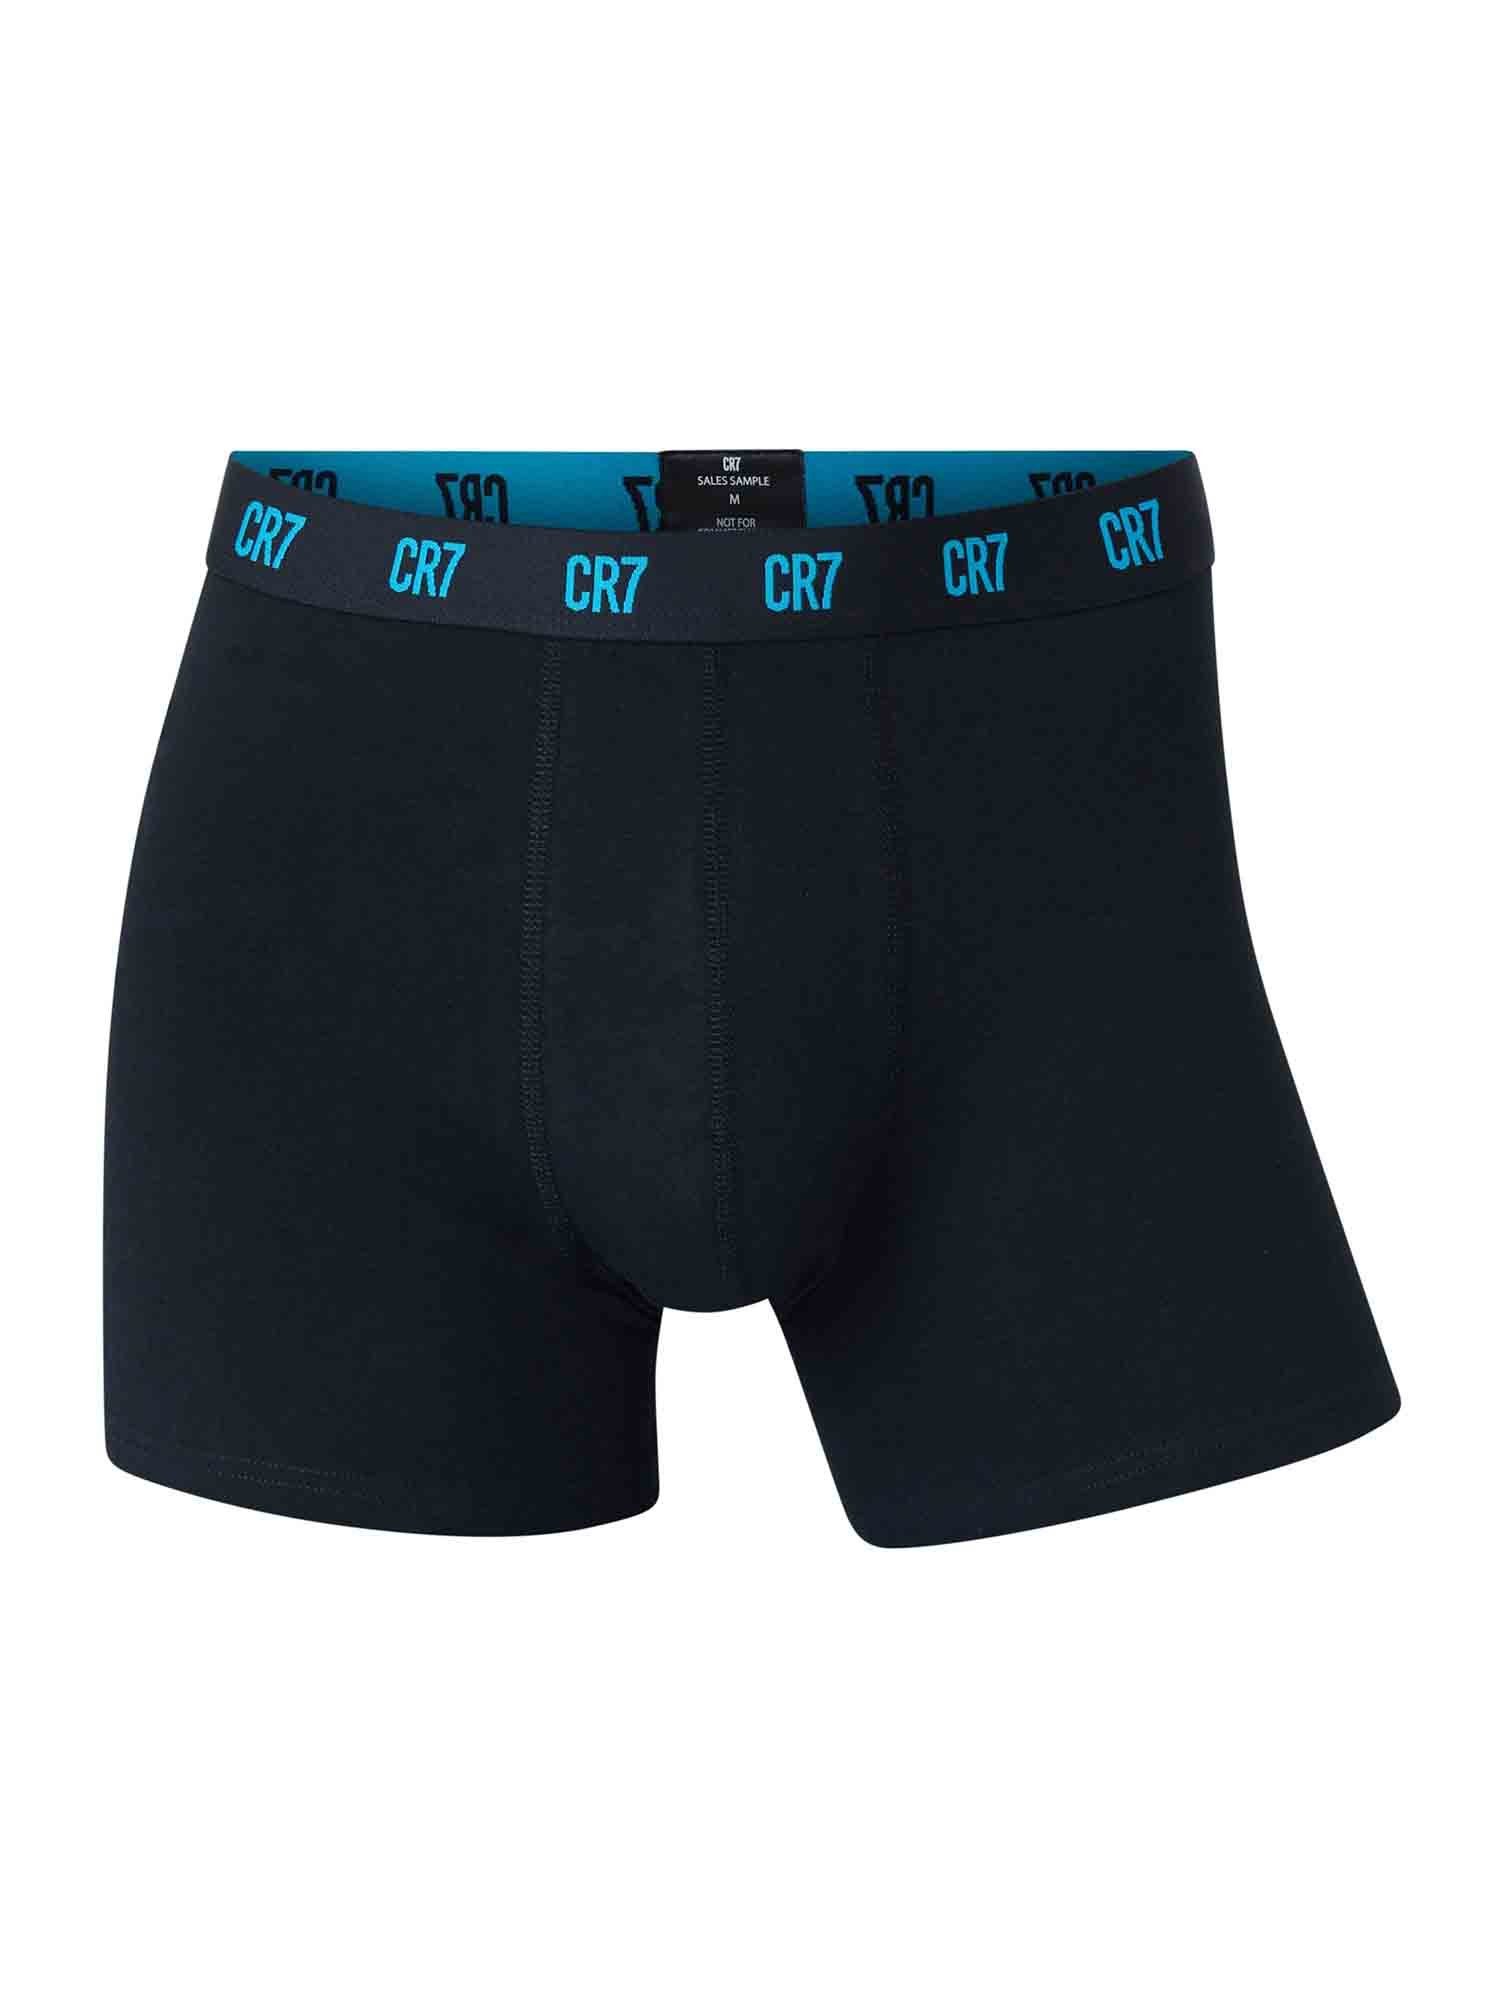 Pants Boxershorts Retro Multipack Pants Retro (3-St) CR7 Multi Herren Männer Trunks 31